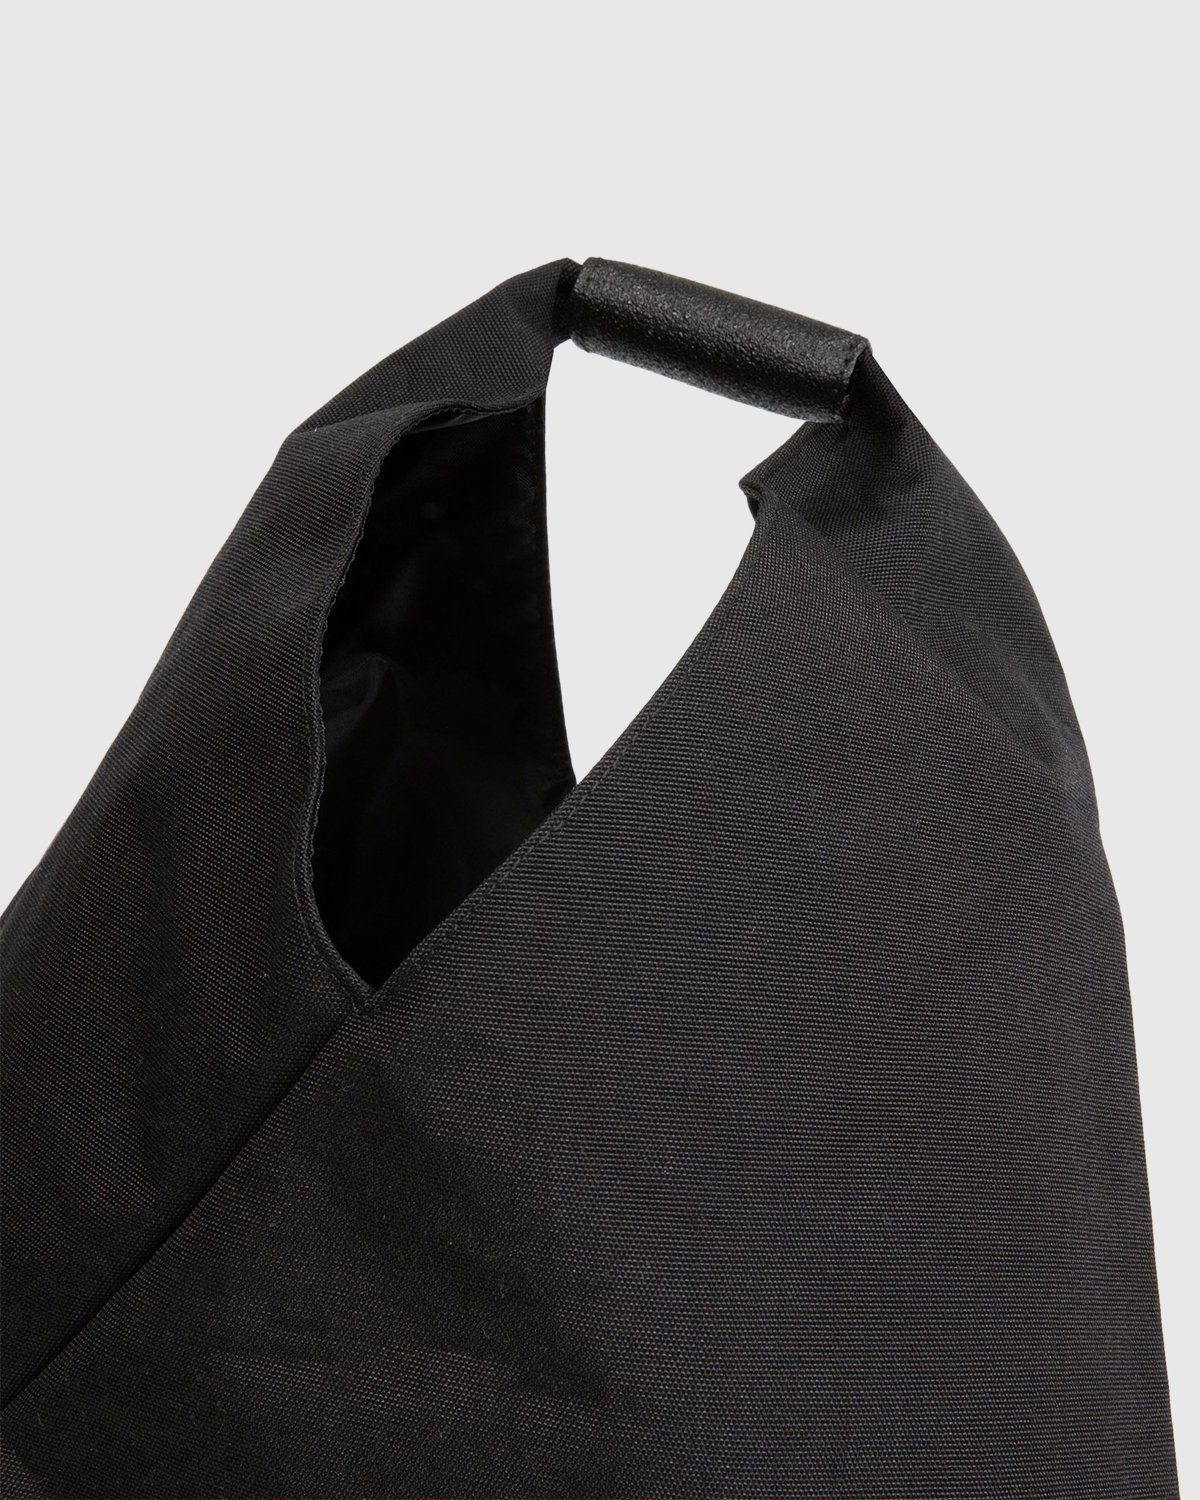 MM6 Maison Margiela x Eastpak – Shopping Bag Black - Bags - Black - Image 3